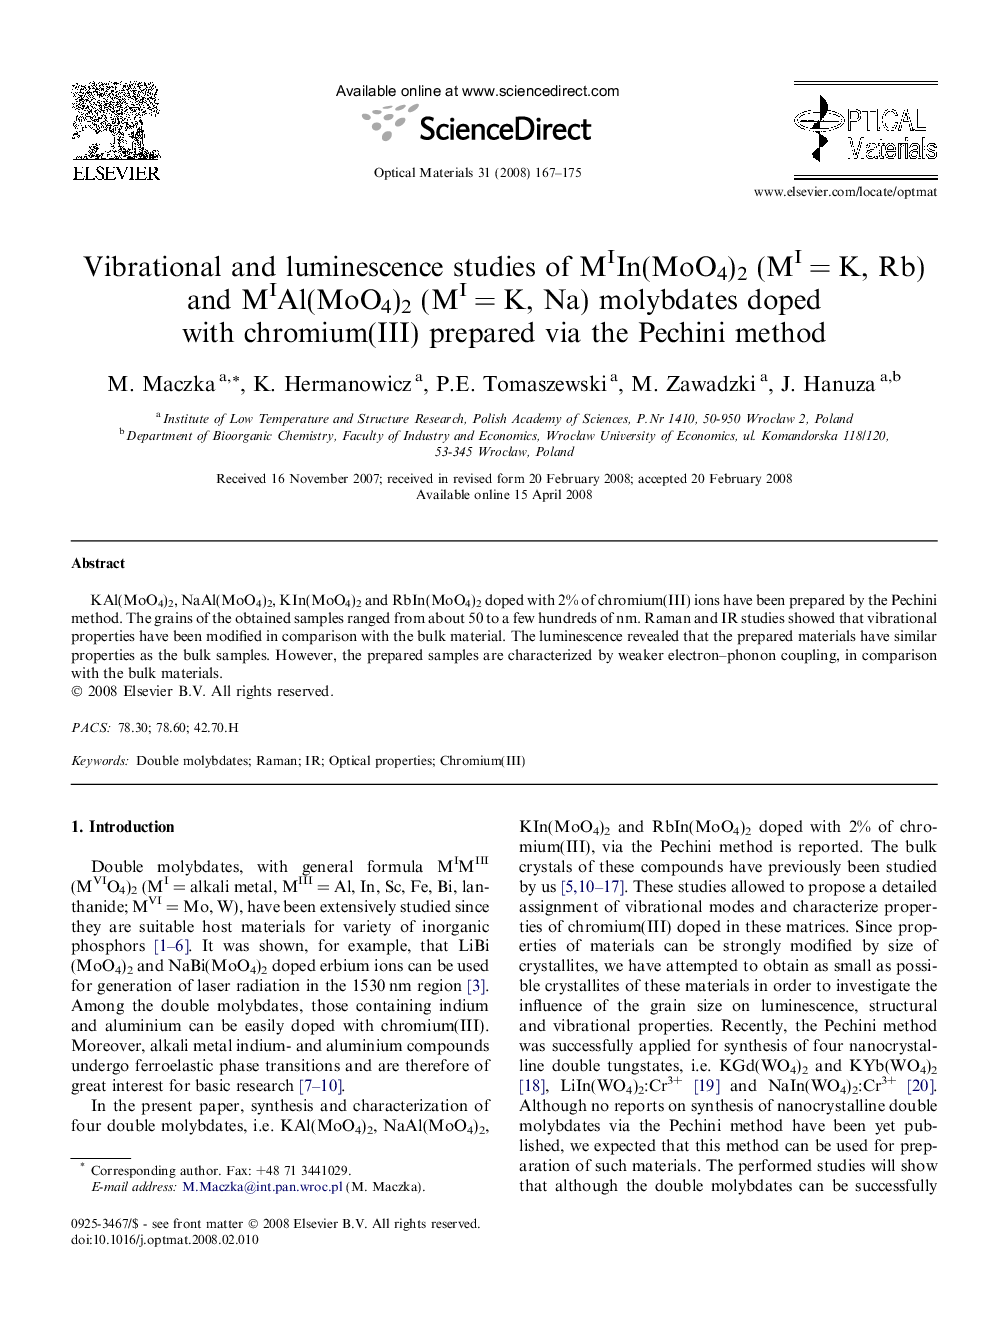 Vibrational and luminescence studies of MIIn(MoO4)2 (MI = K, Rb) and MIAl(MoO4)2 (MI = K, Na) molybdates doped with chromium(III) prepared via the Pechini method